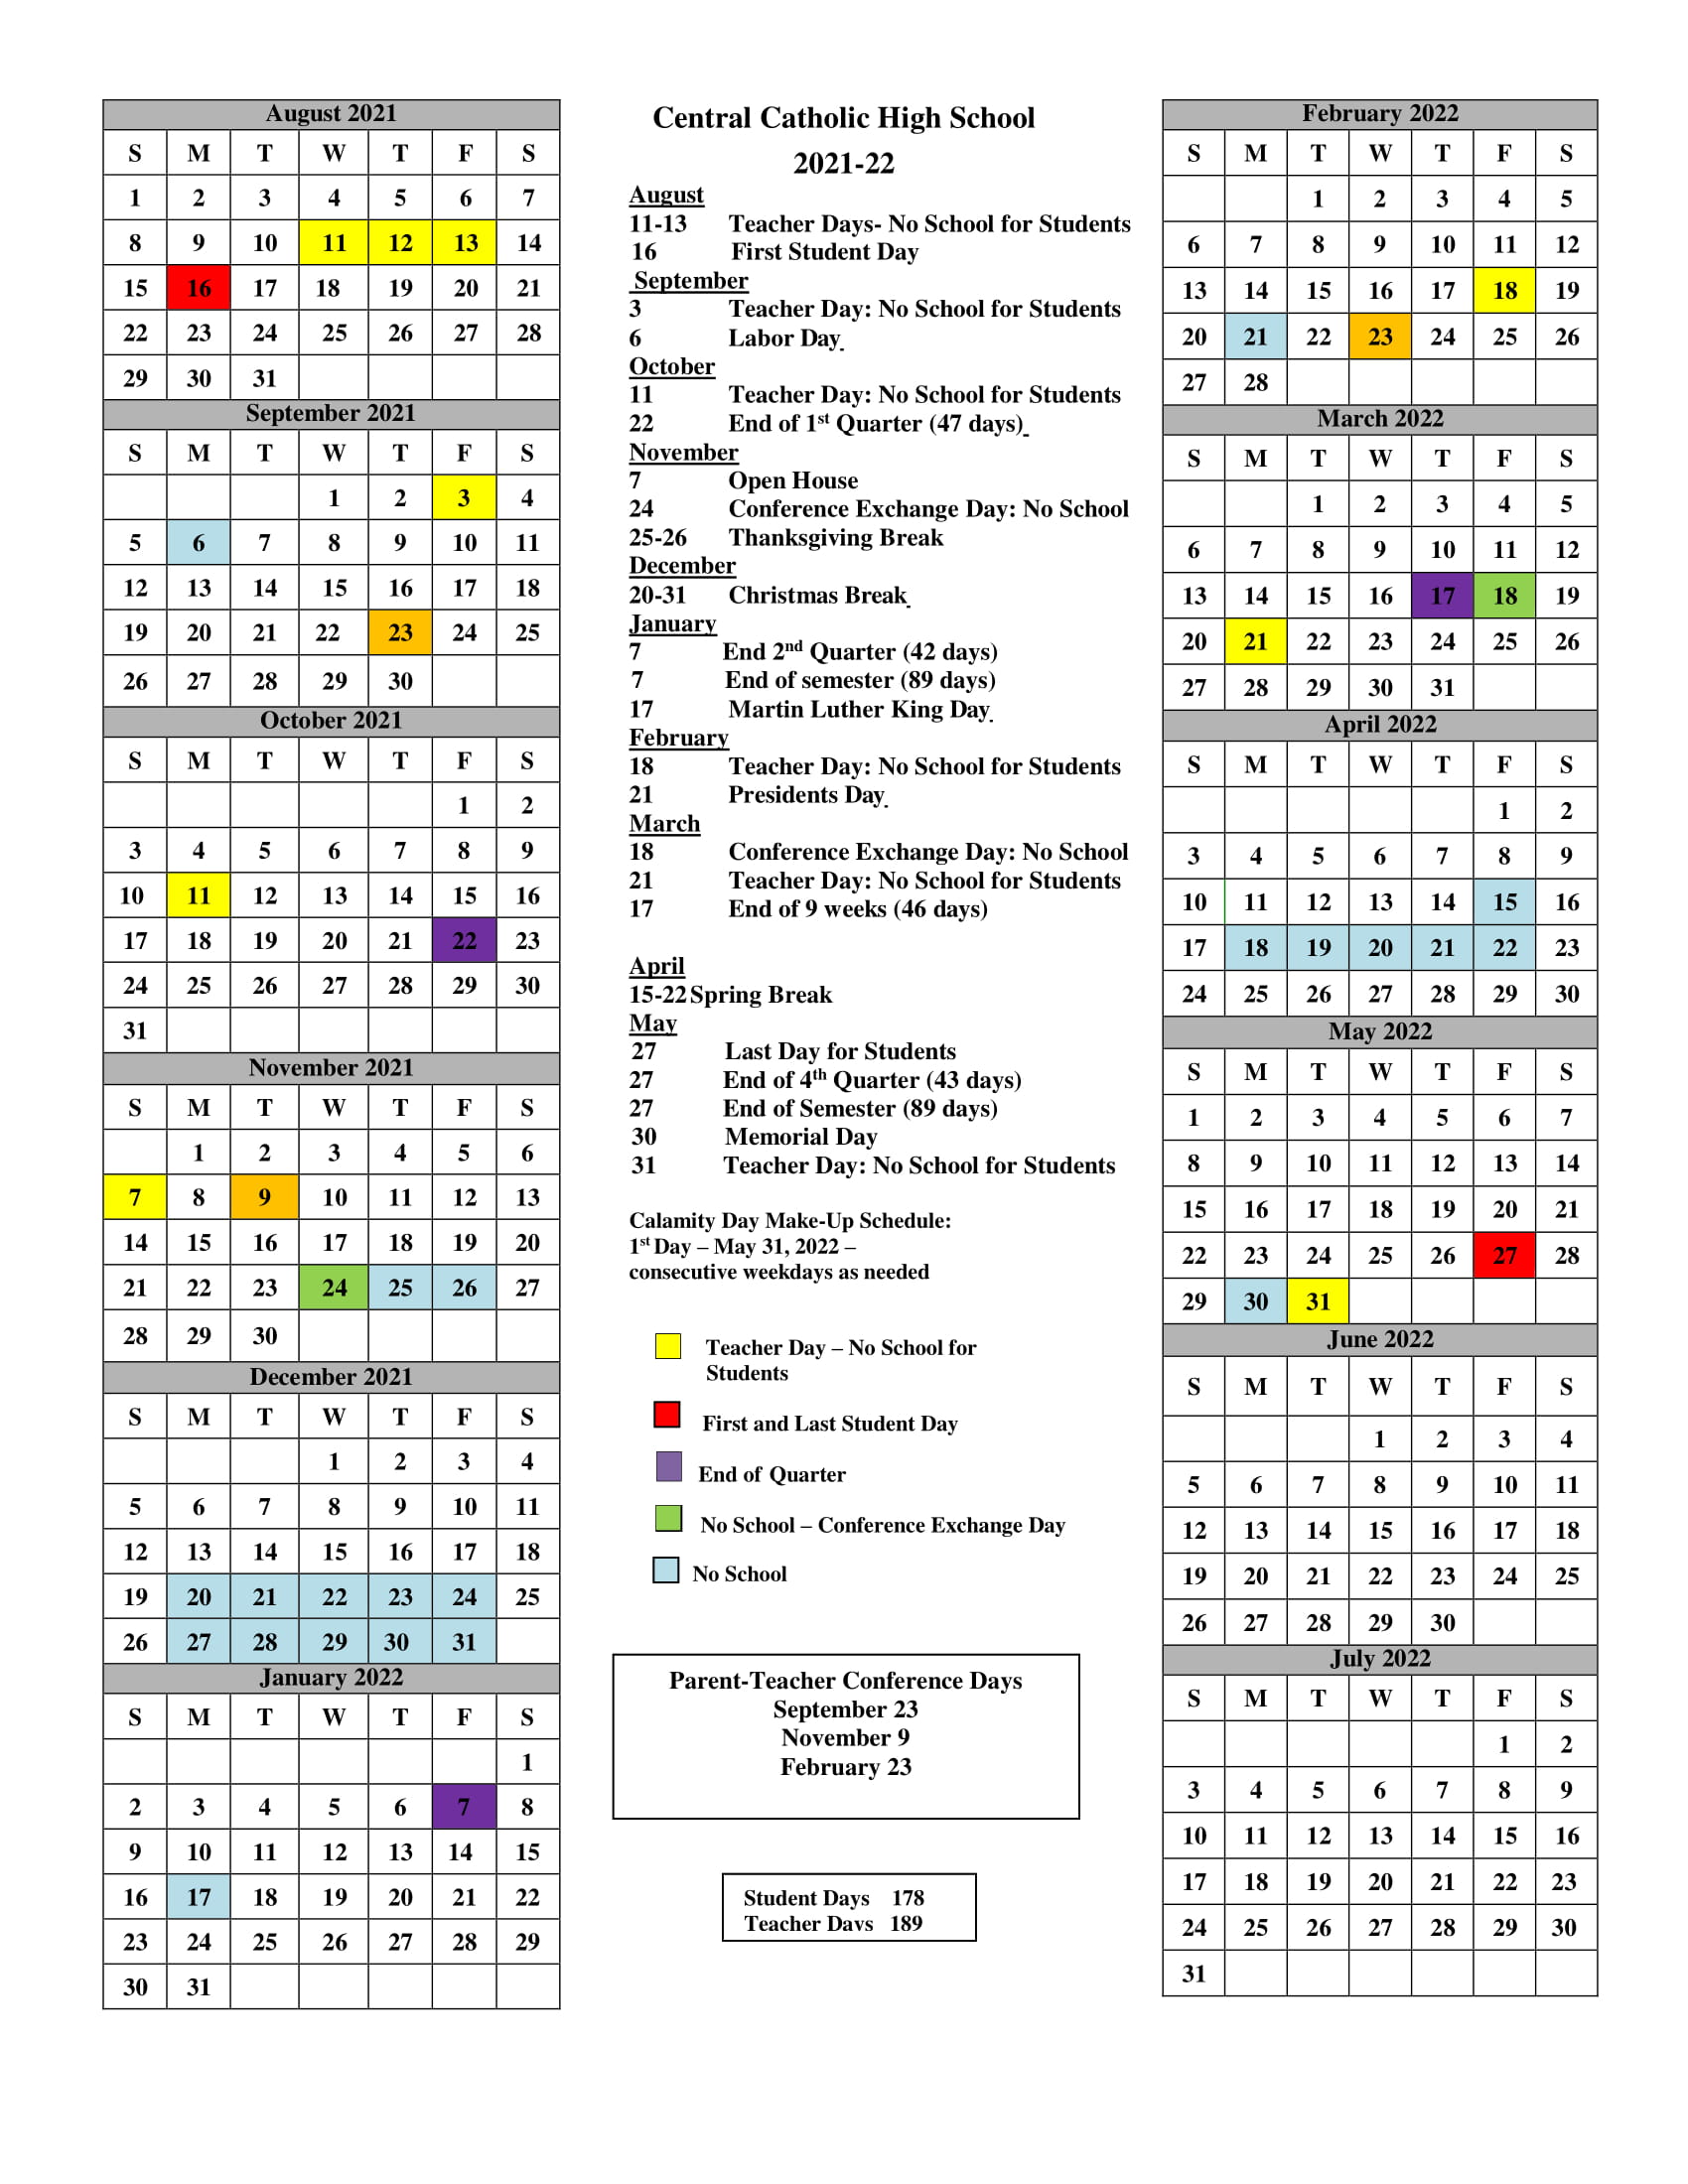 Ohio University Academic Calendar 2022 2023 Academic Calendar 2021-2022